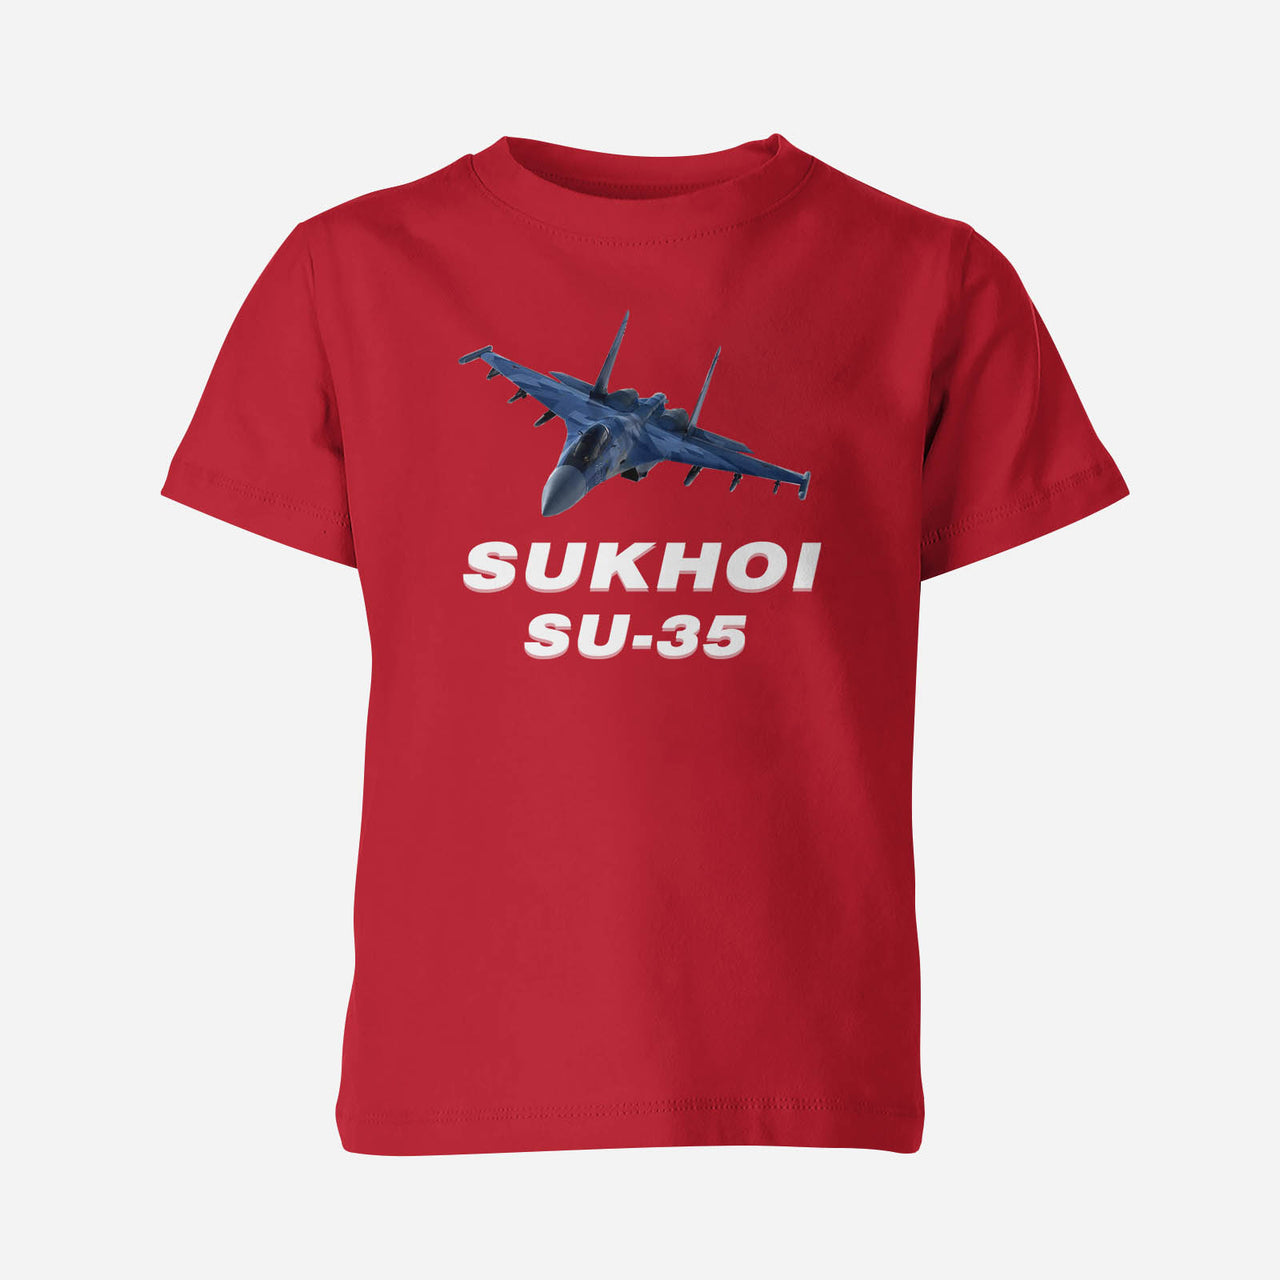 The Sukhoi SU-35 Designed Children T-Shirts